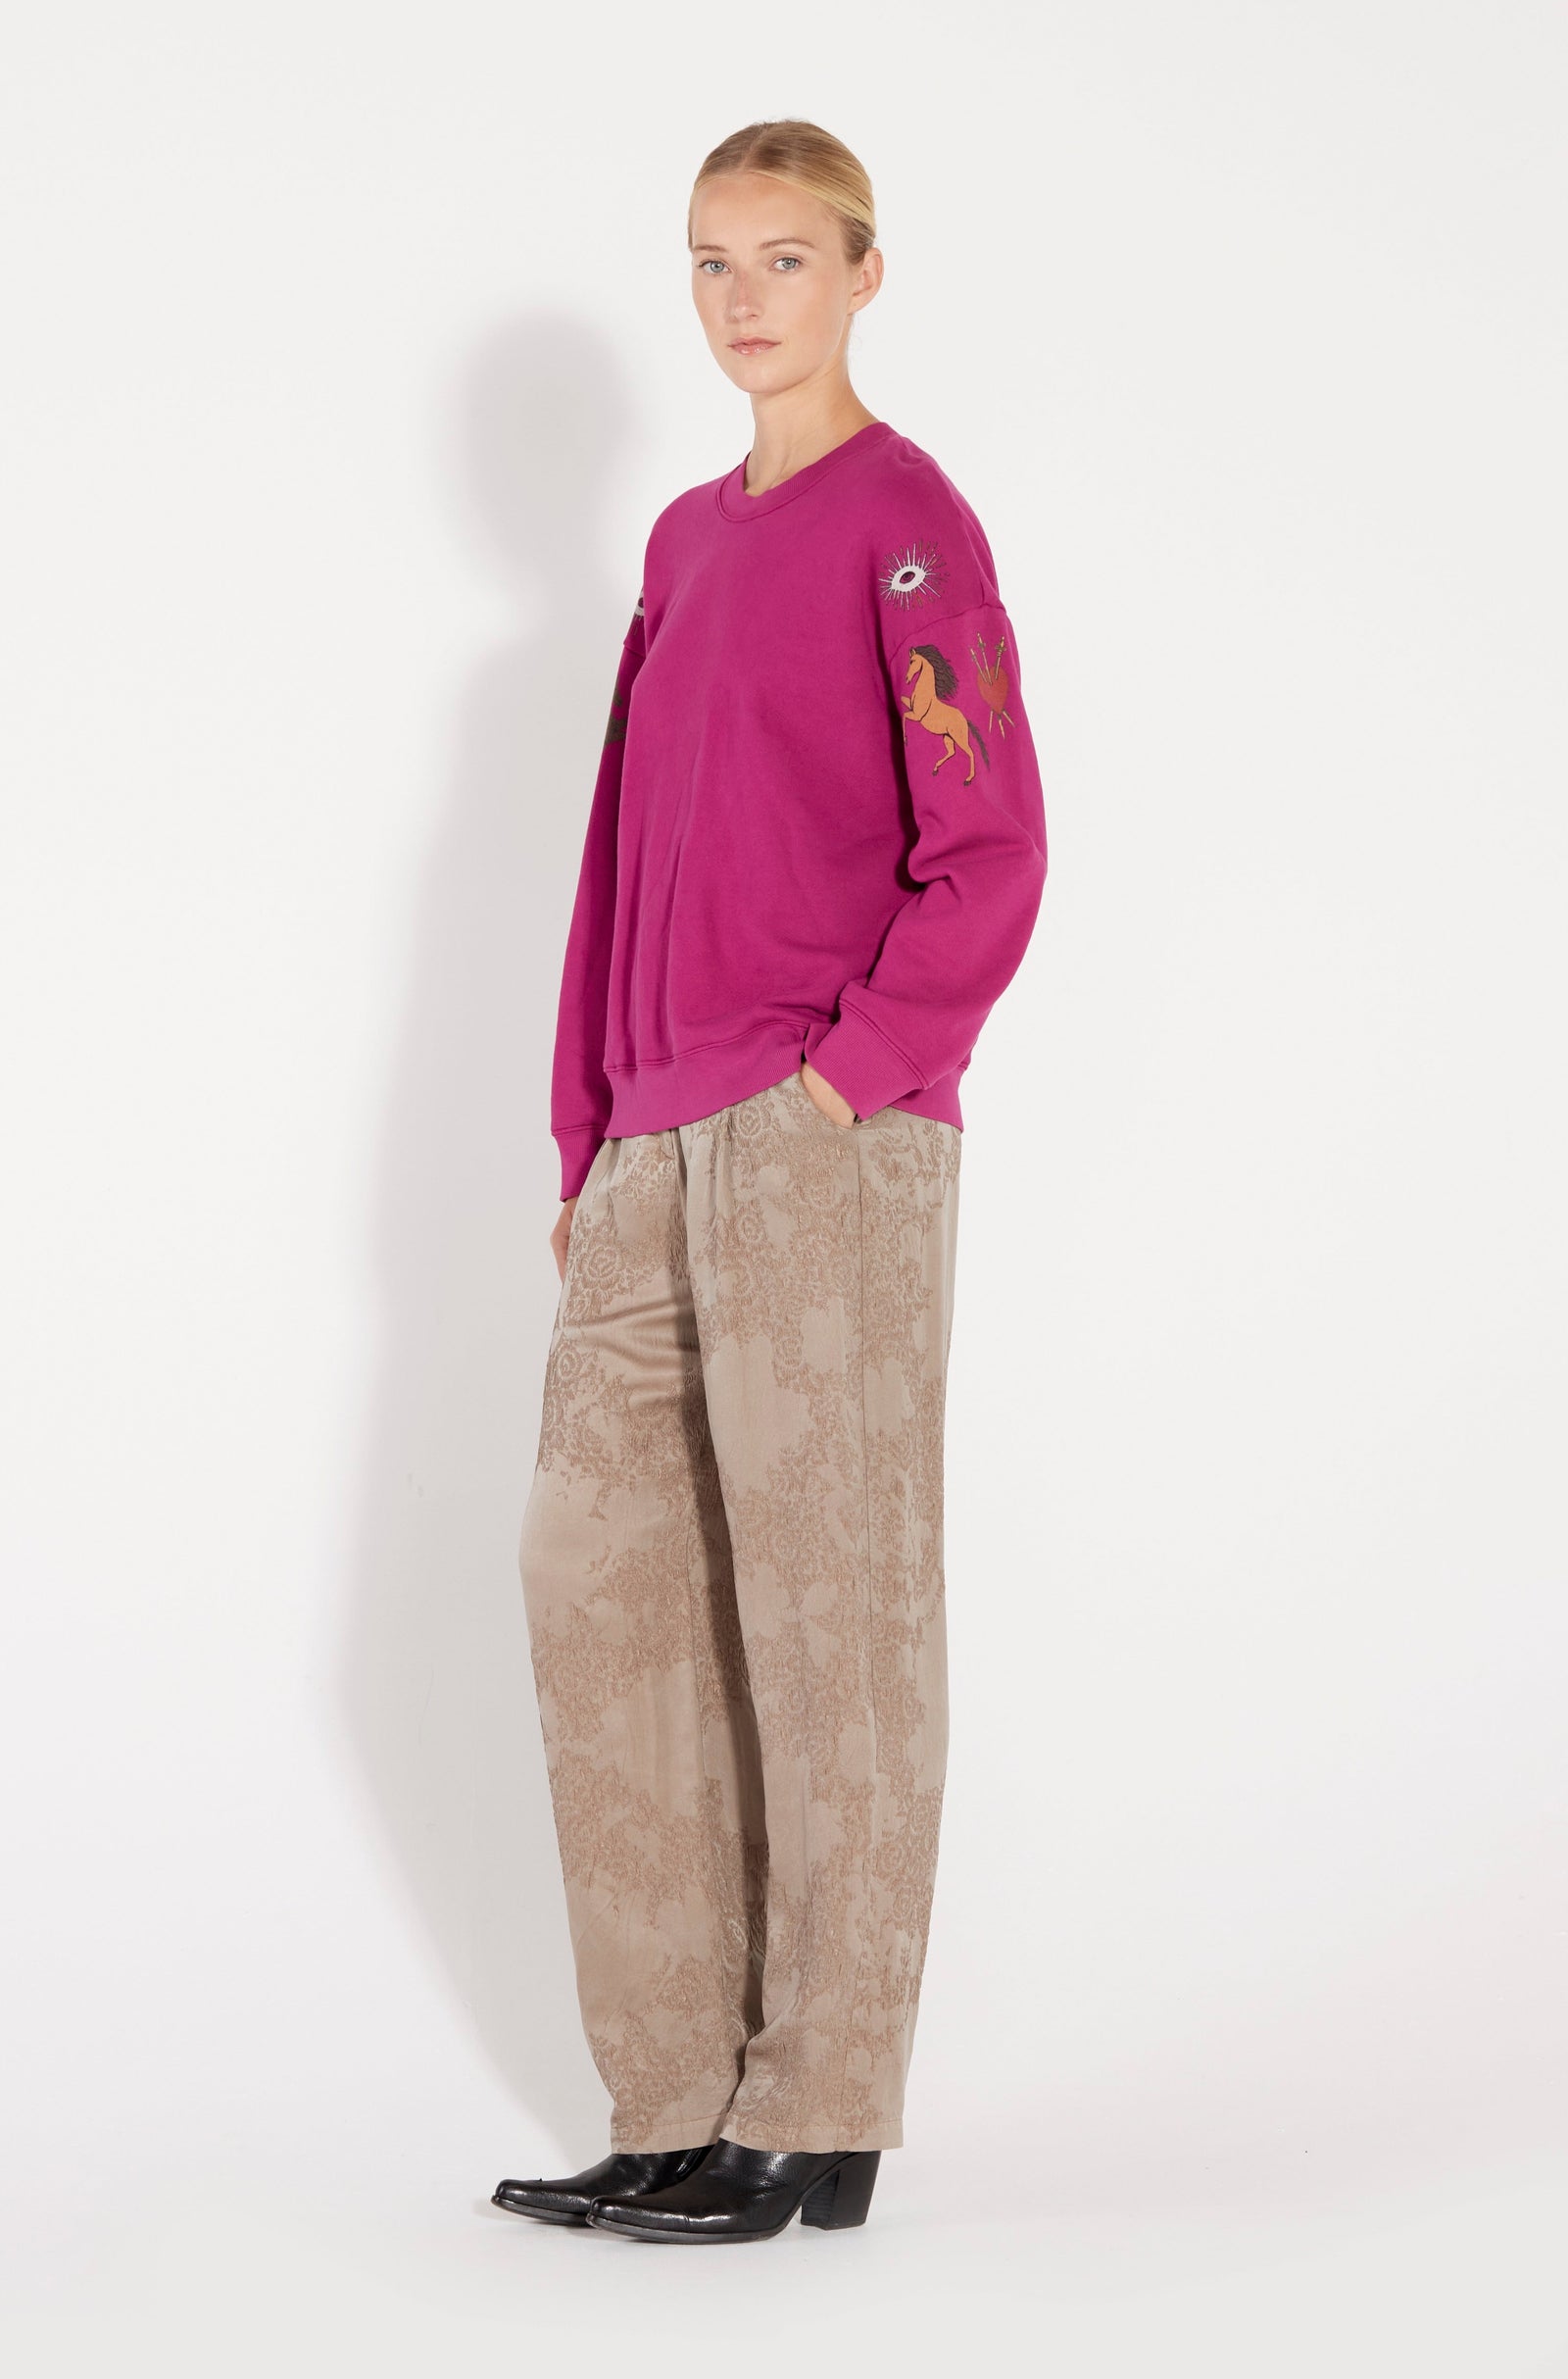 Dahlia Tarot Fleece Yves Sweatshirt Full Side View